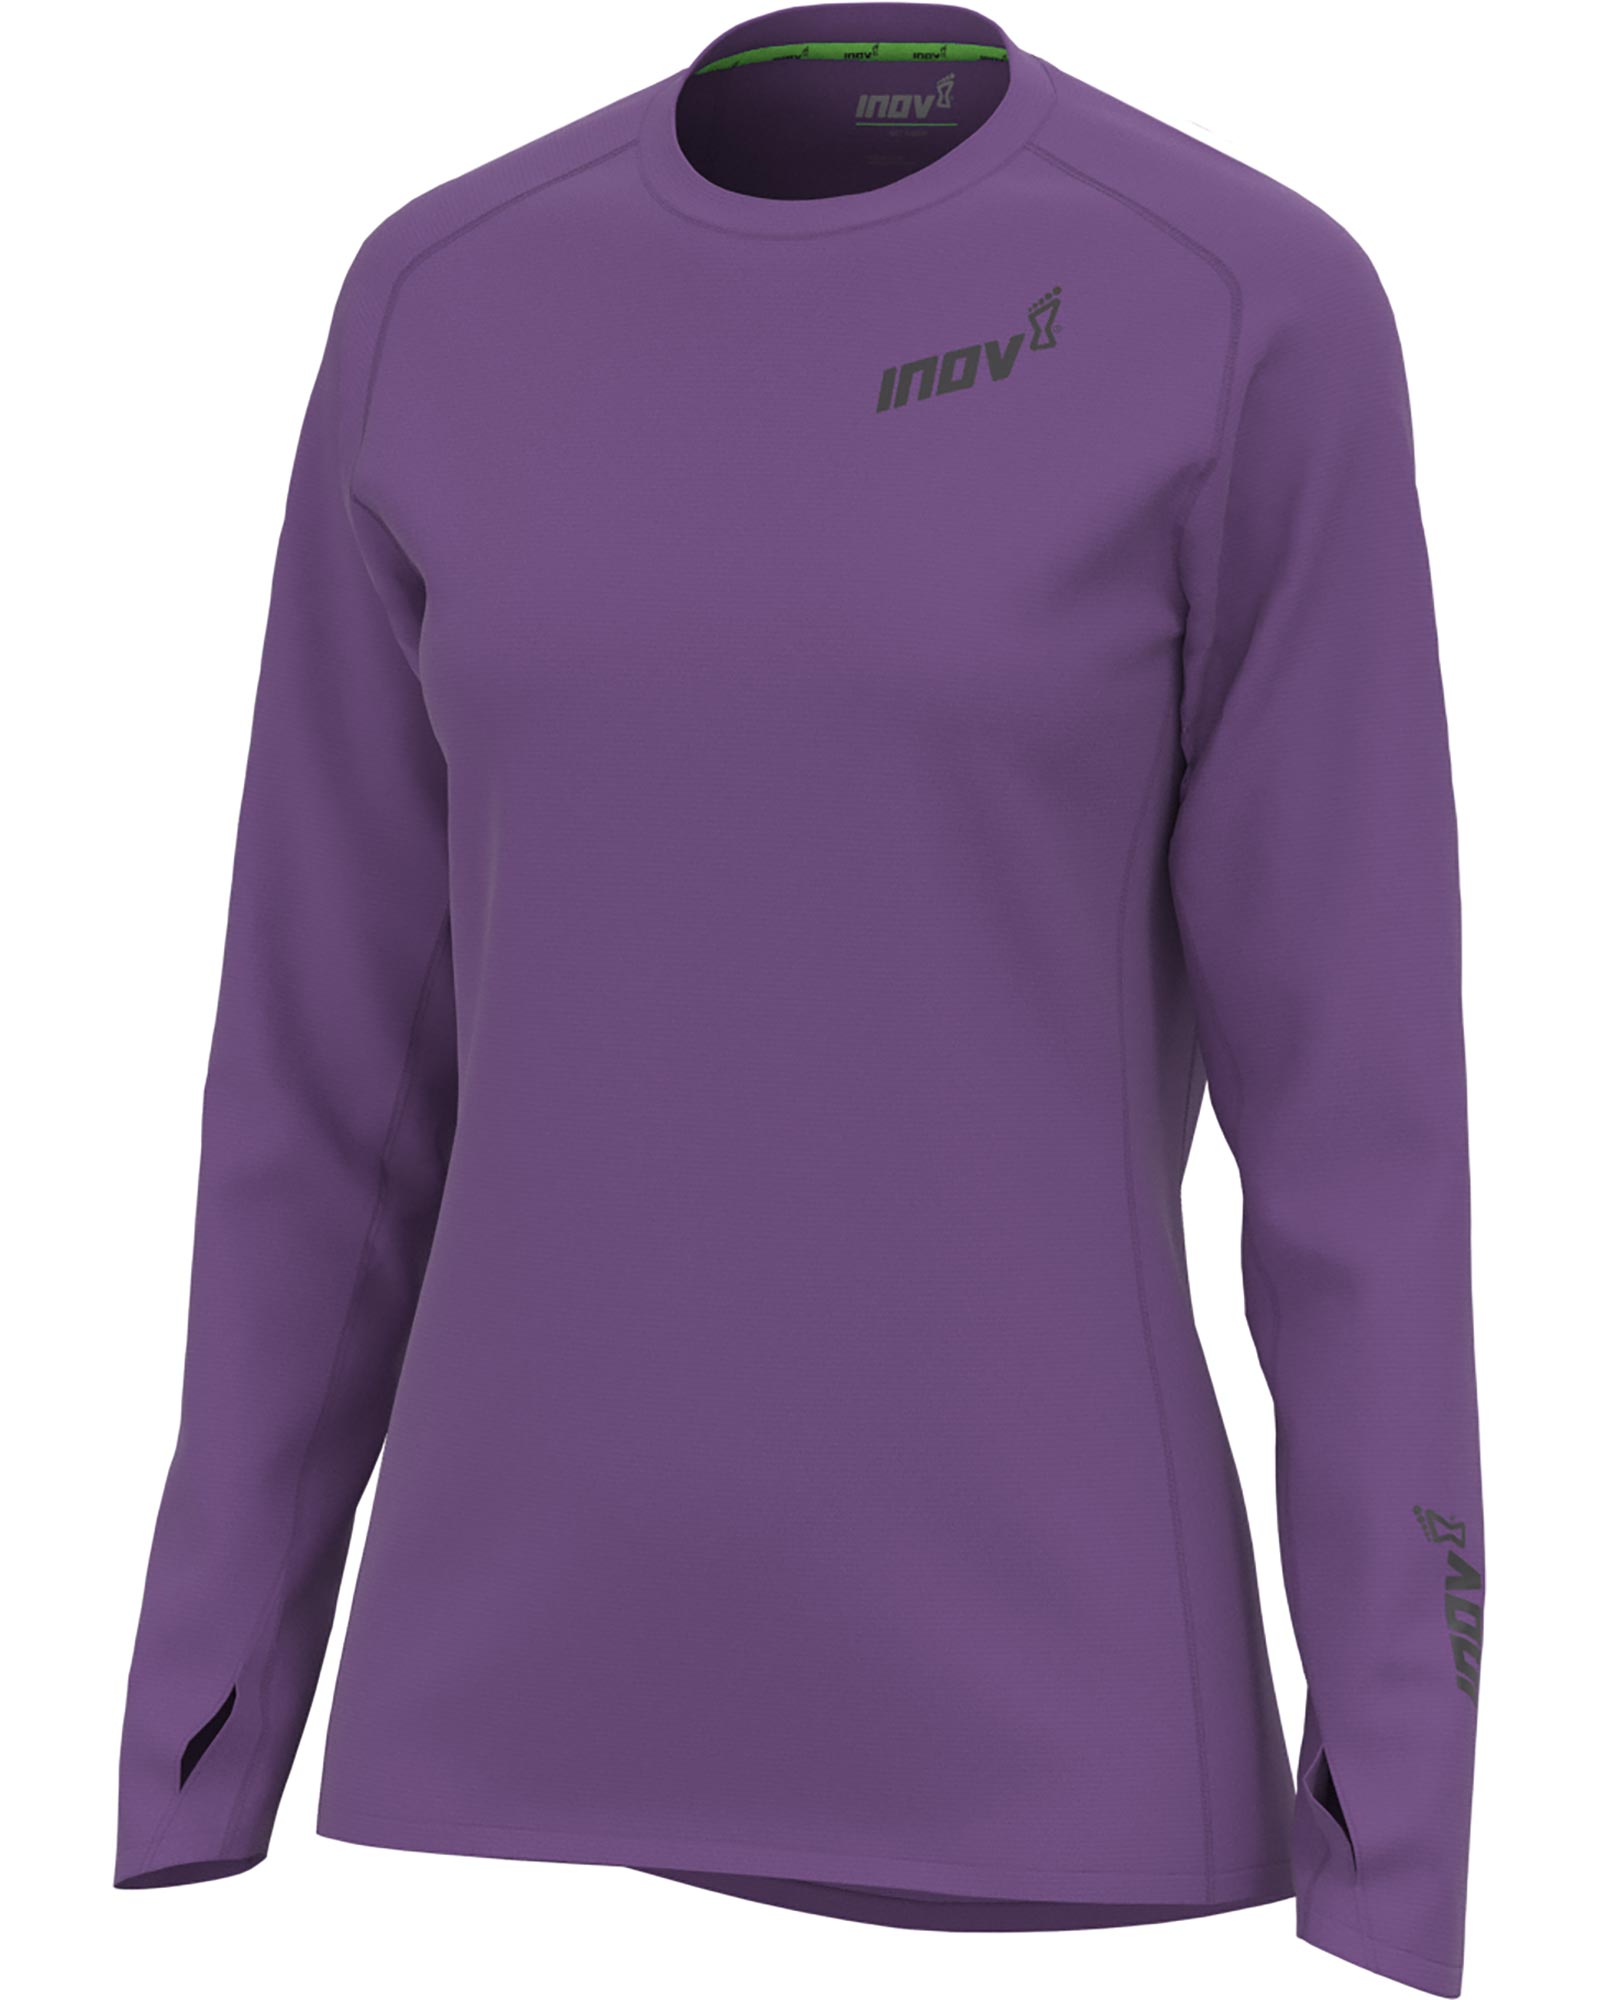 Inov 8 Base Elite Women’s Long Sleeve Top - Purple 10